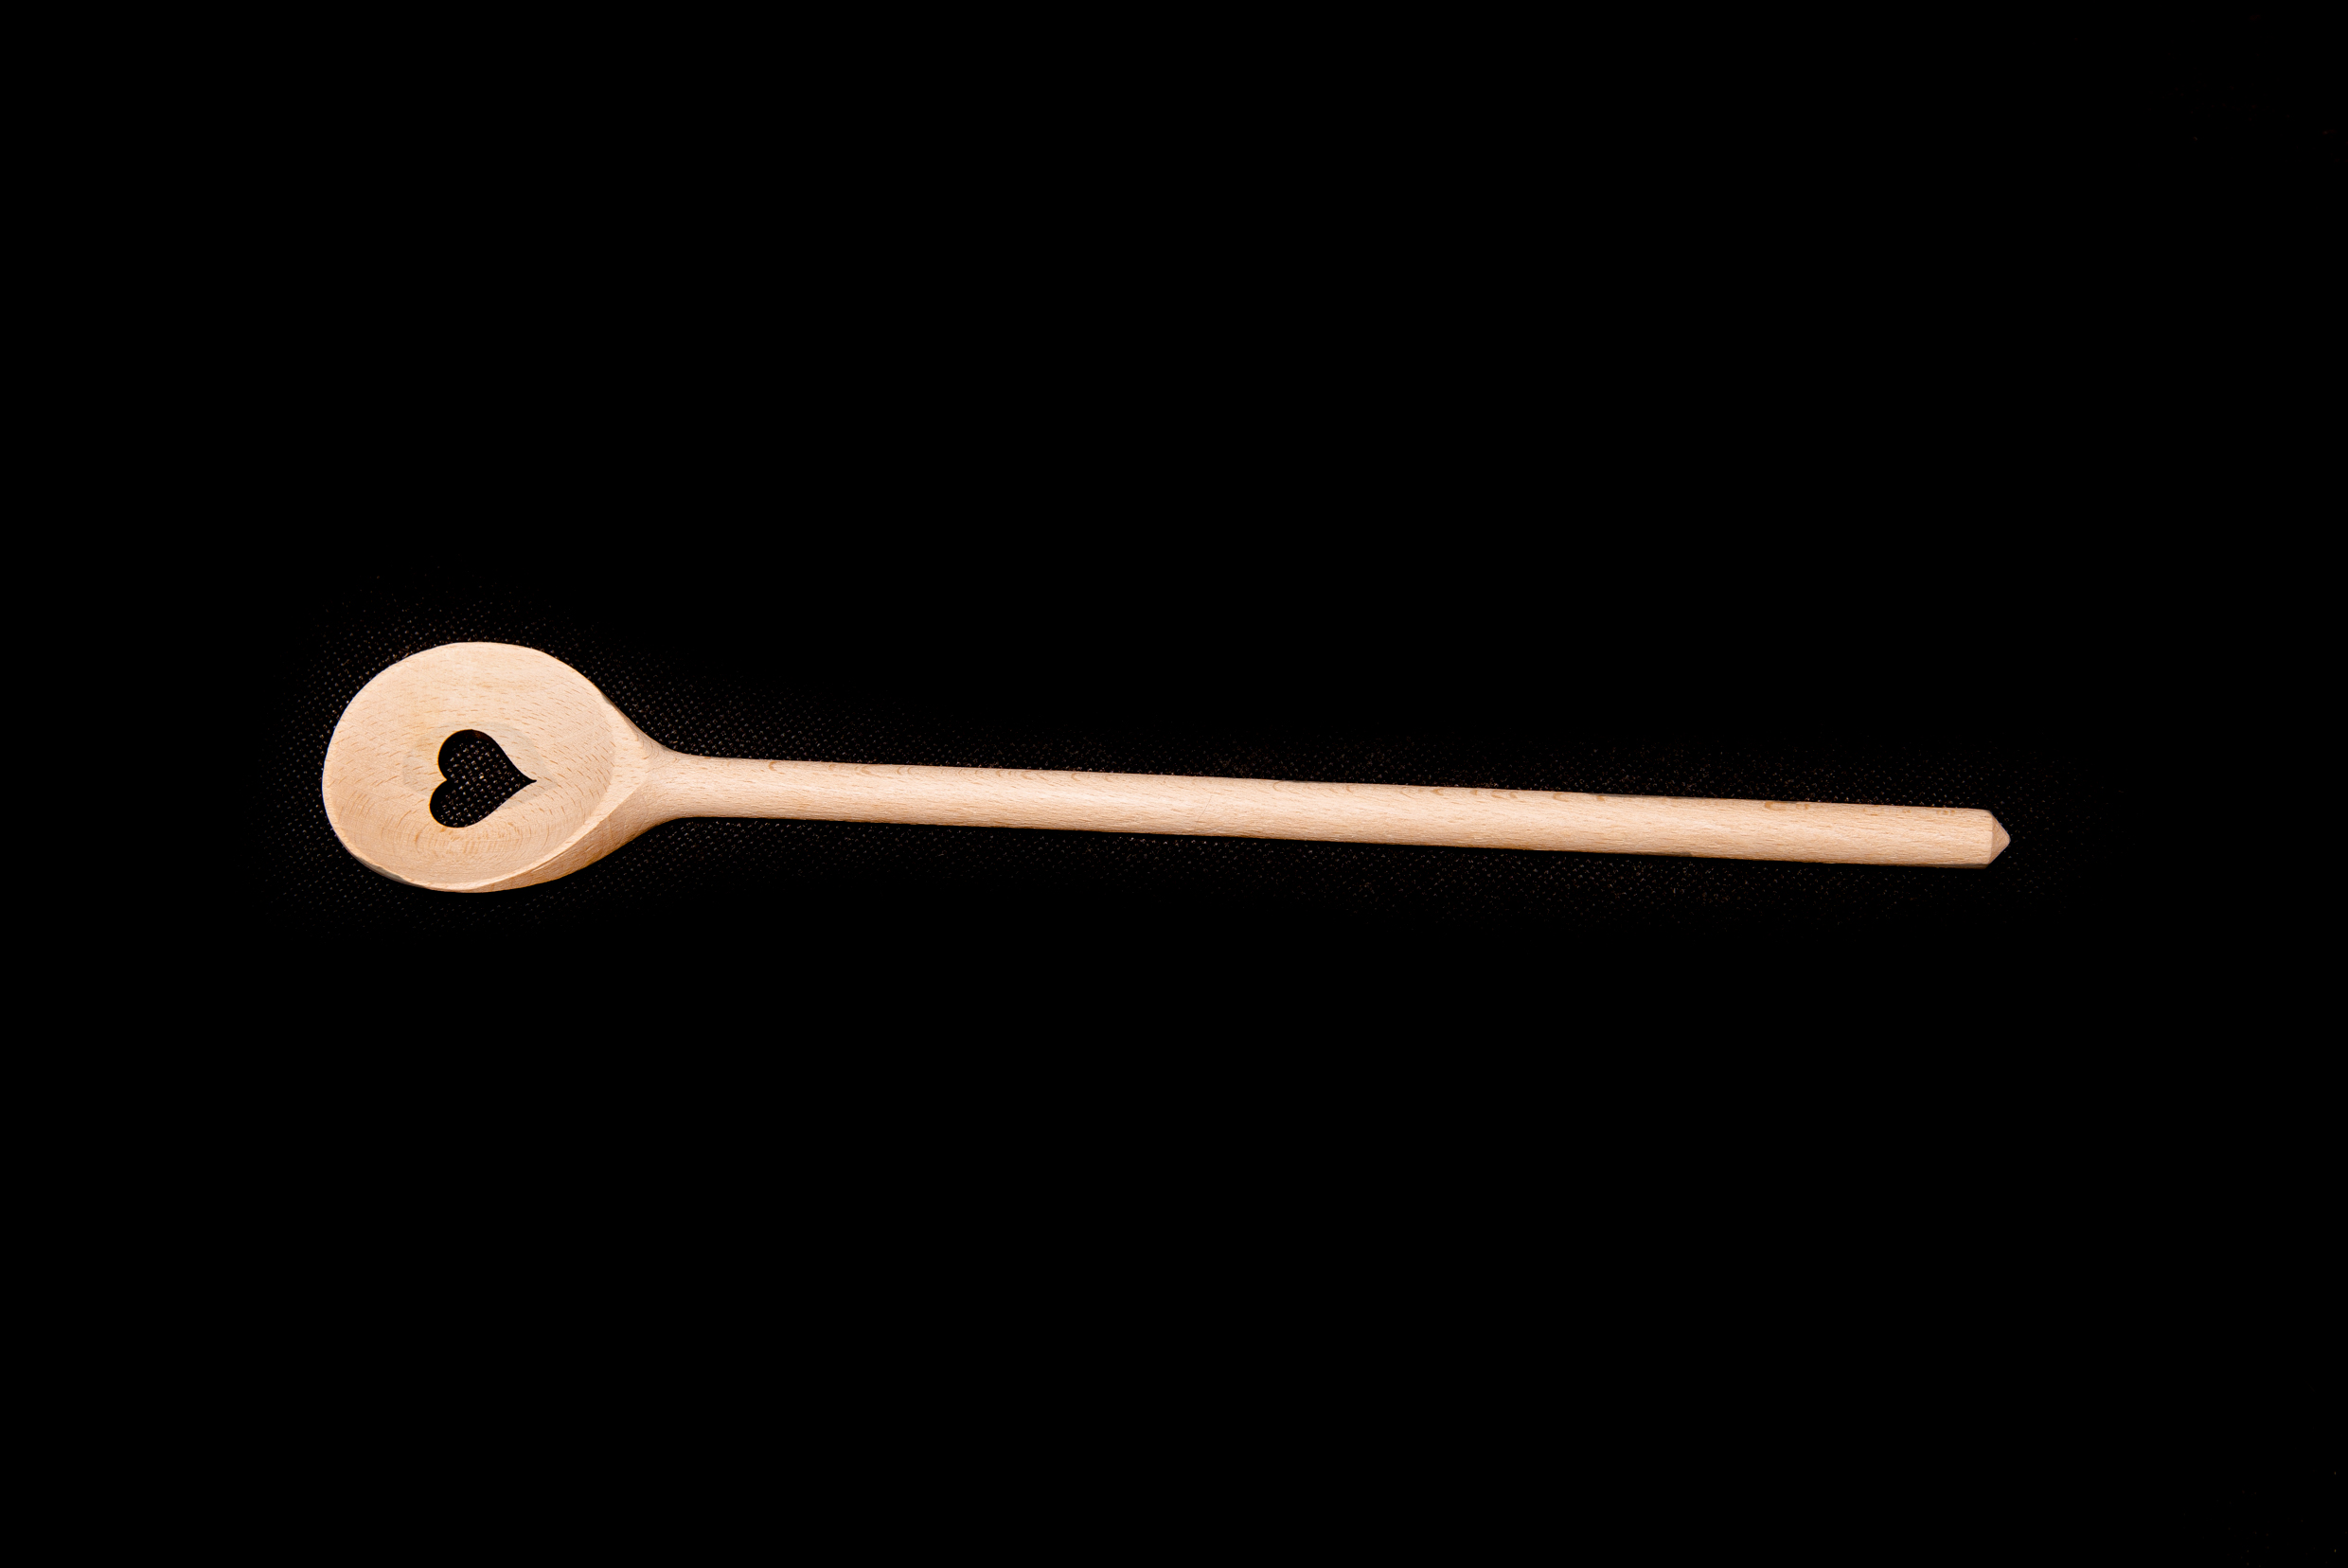 Round spoon burned - image